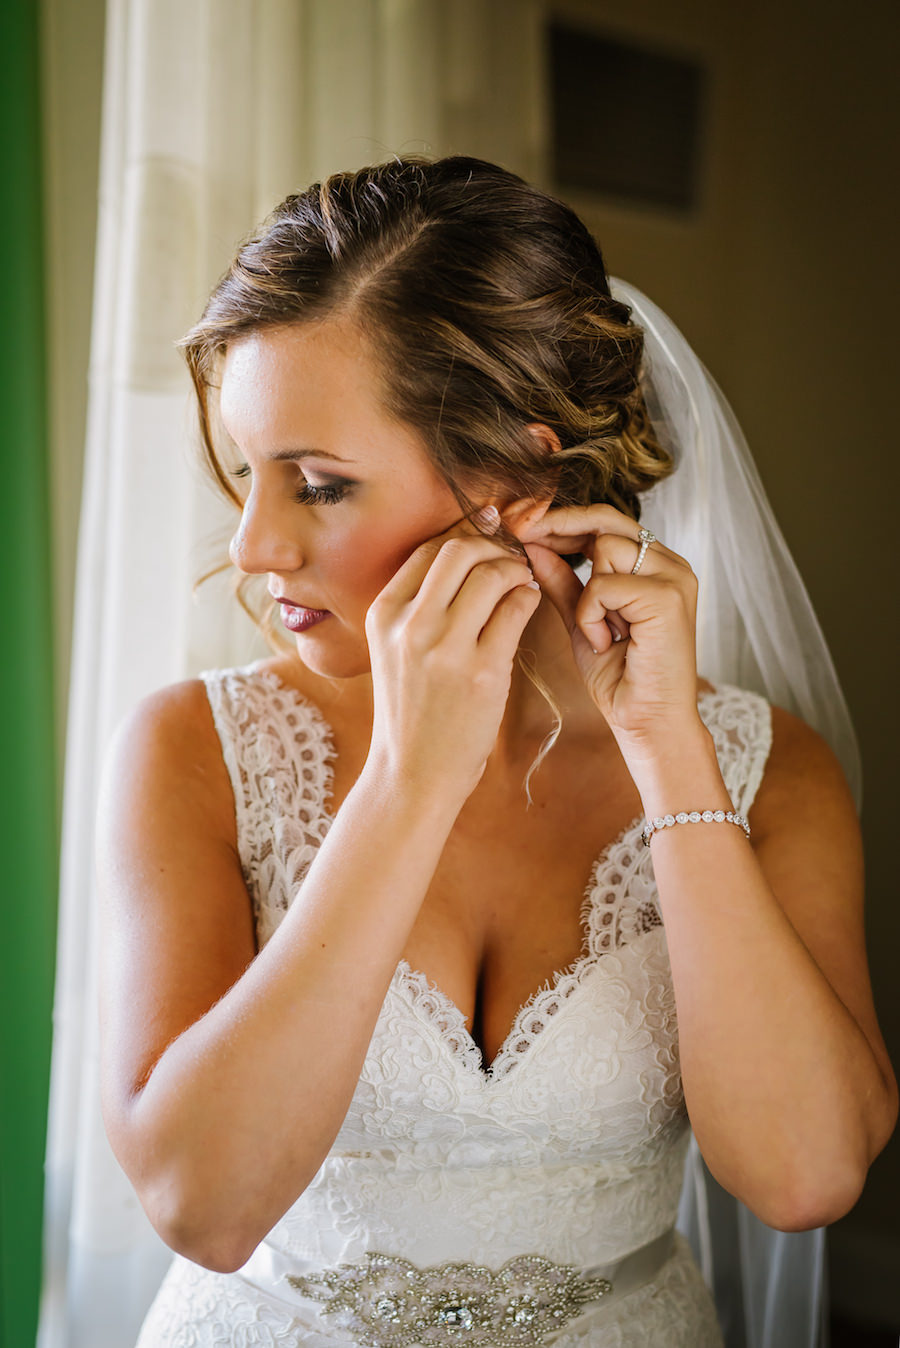 Bride Getting Ready on Wedding Day | Crystal, Rhinestone Diamond Delicate Bridal Jewelry | St. Petersburg Wedding Planner Kimberly Hensley Events